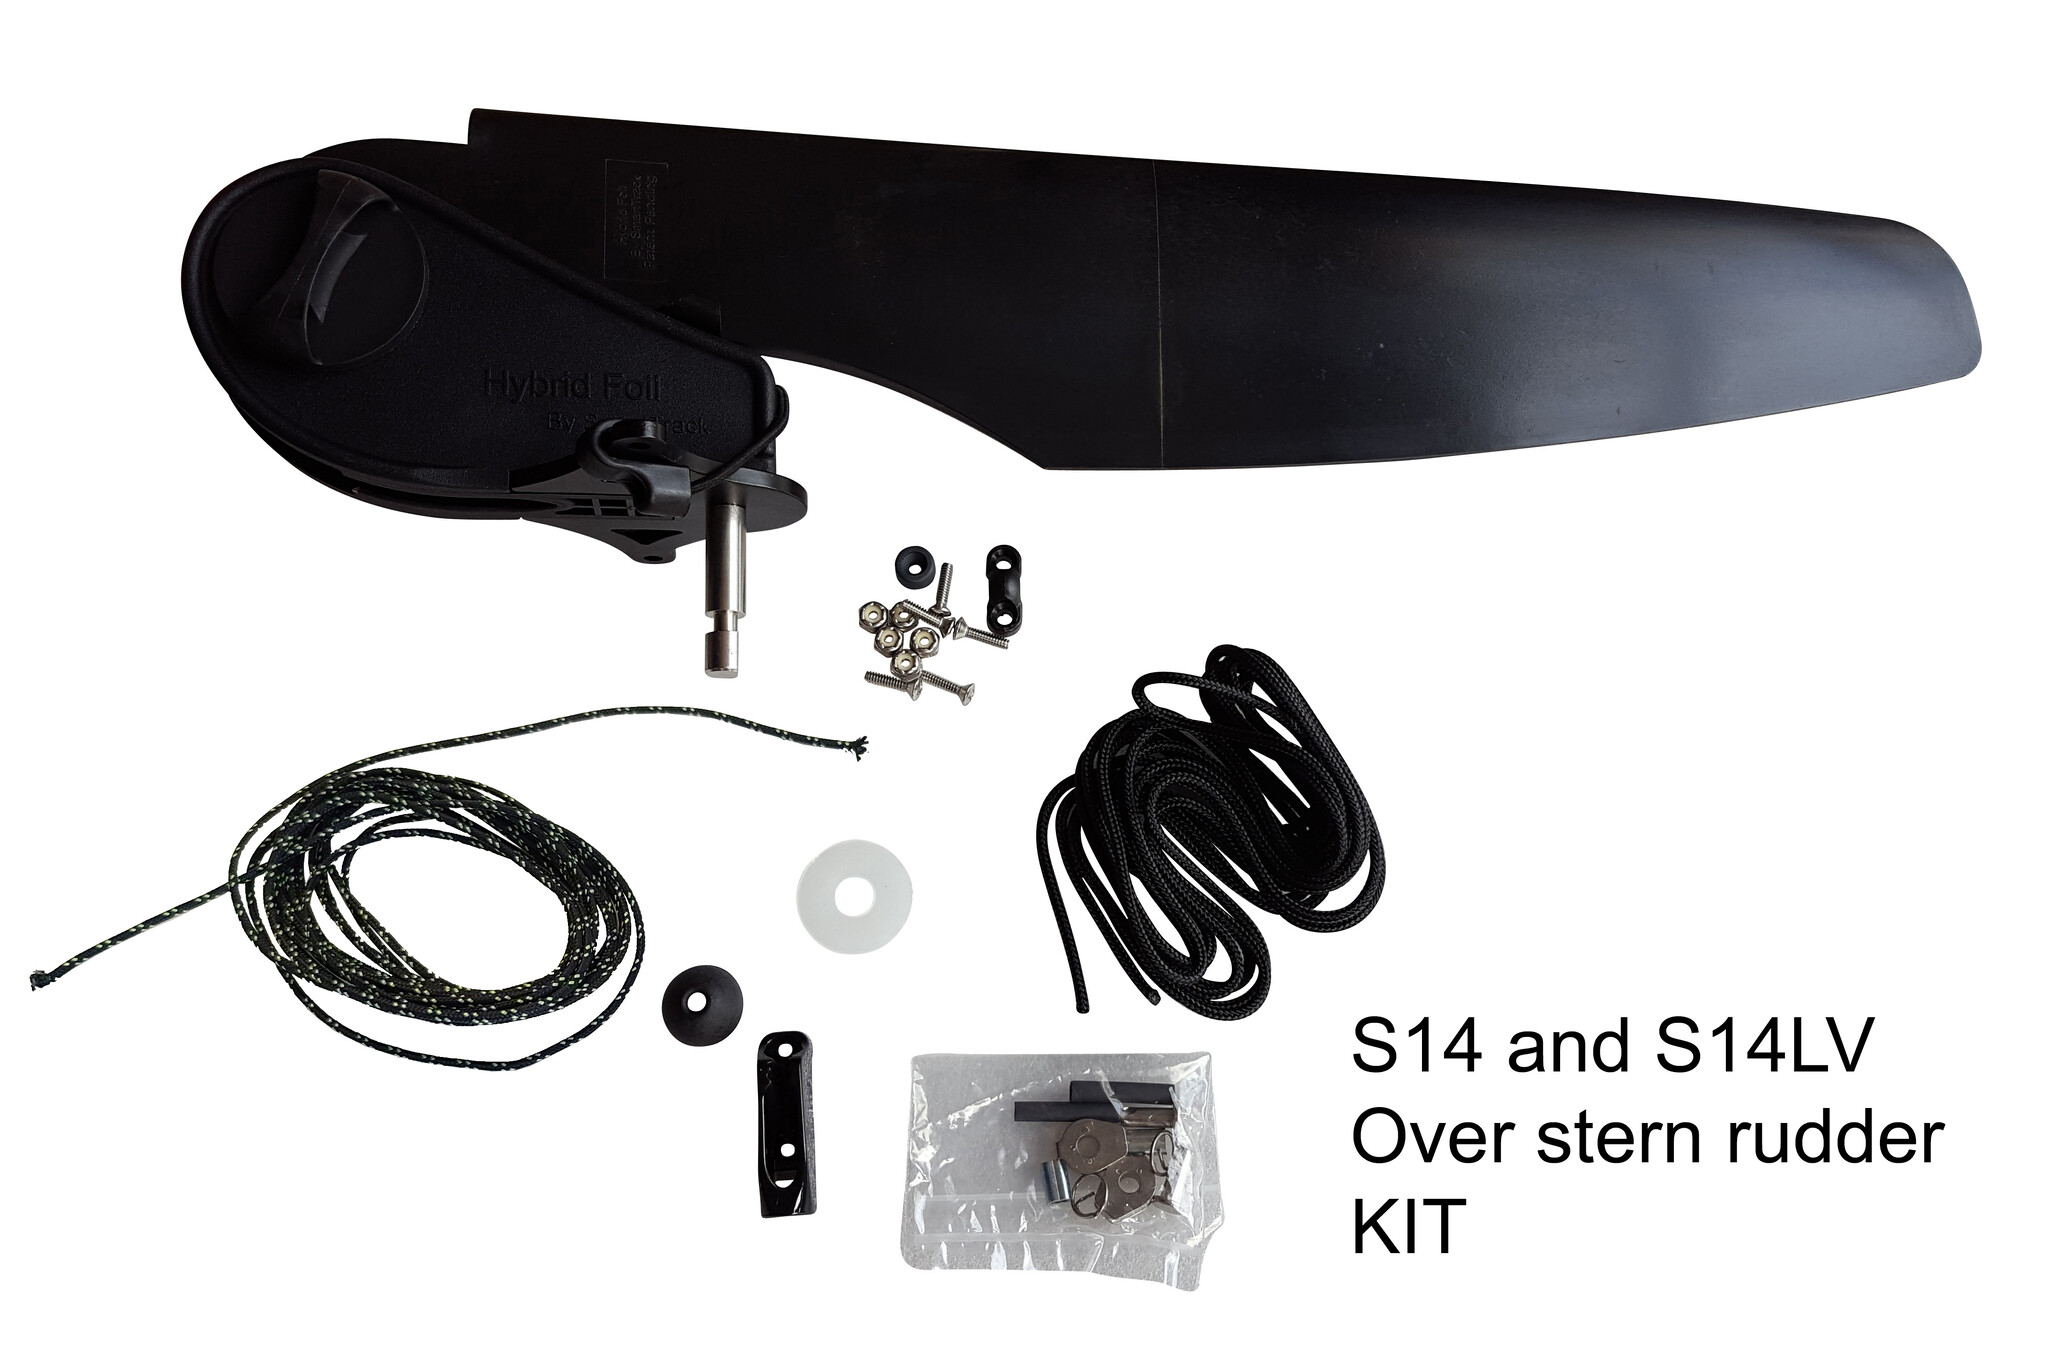 Stellar Kayaks Overstern Rudder Kit W/line (S14/S14LV)